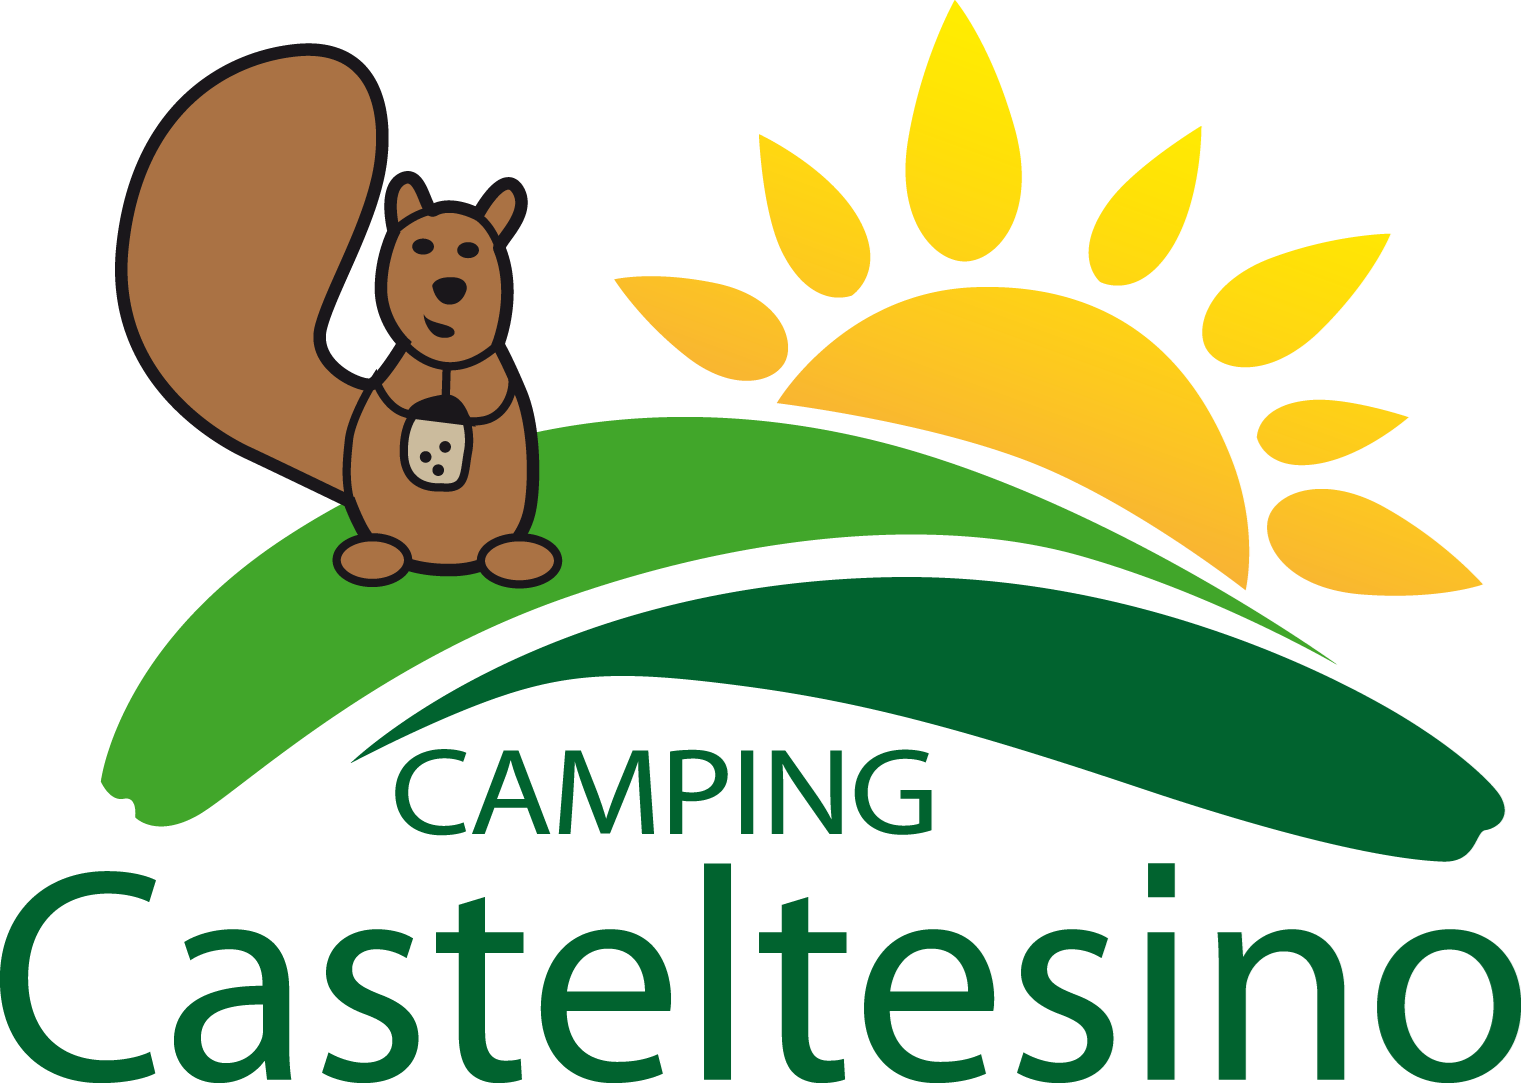 CASTELTESINO CAMPING